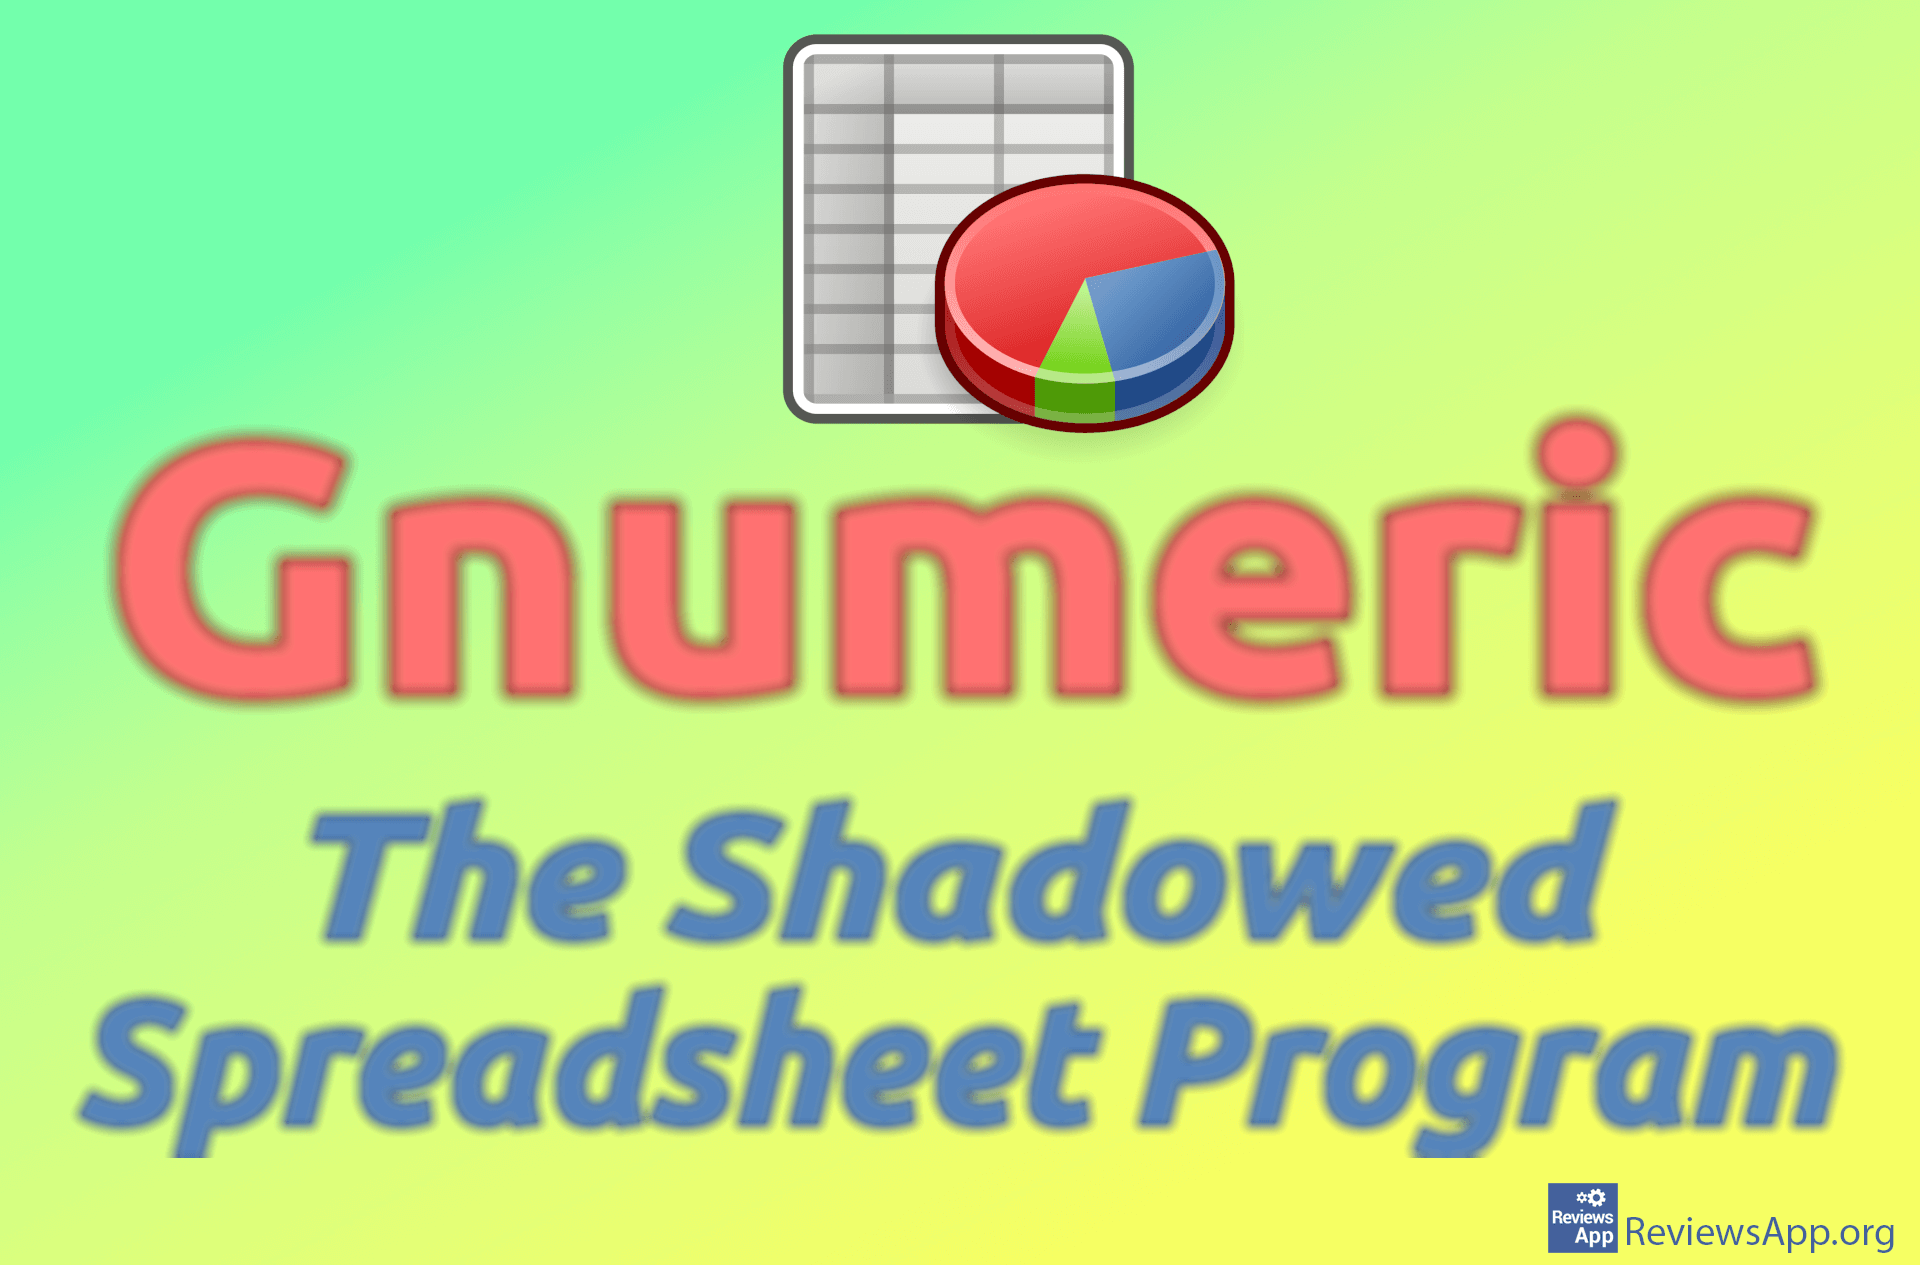 Gnumeric – The Shadowed Spreadsheet Program